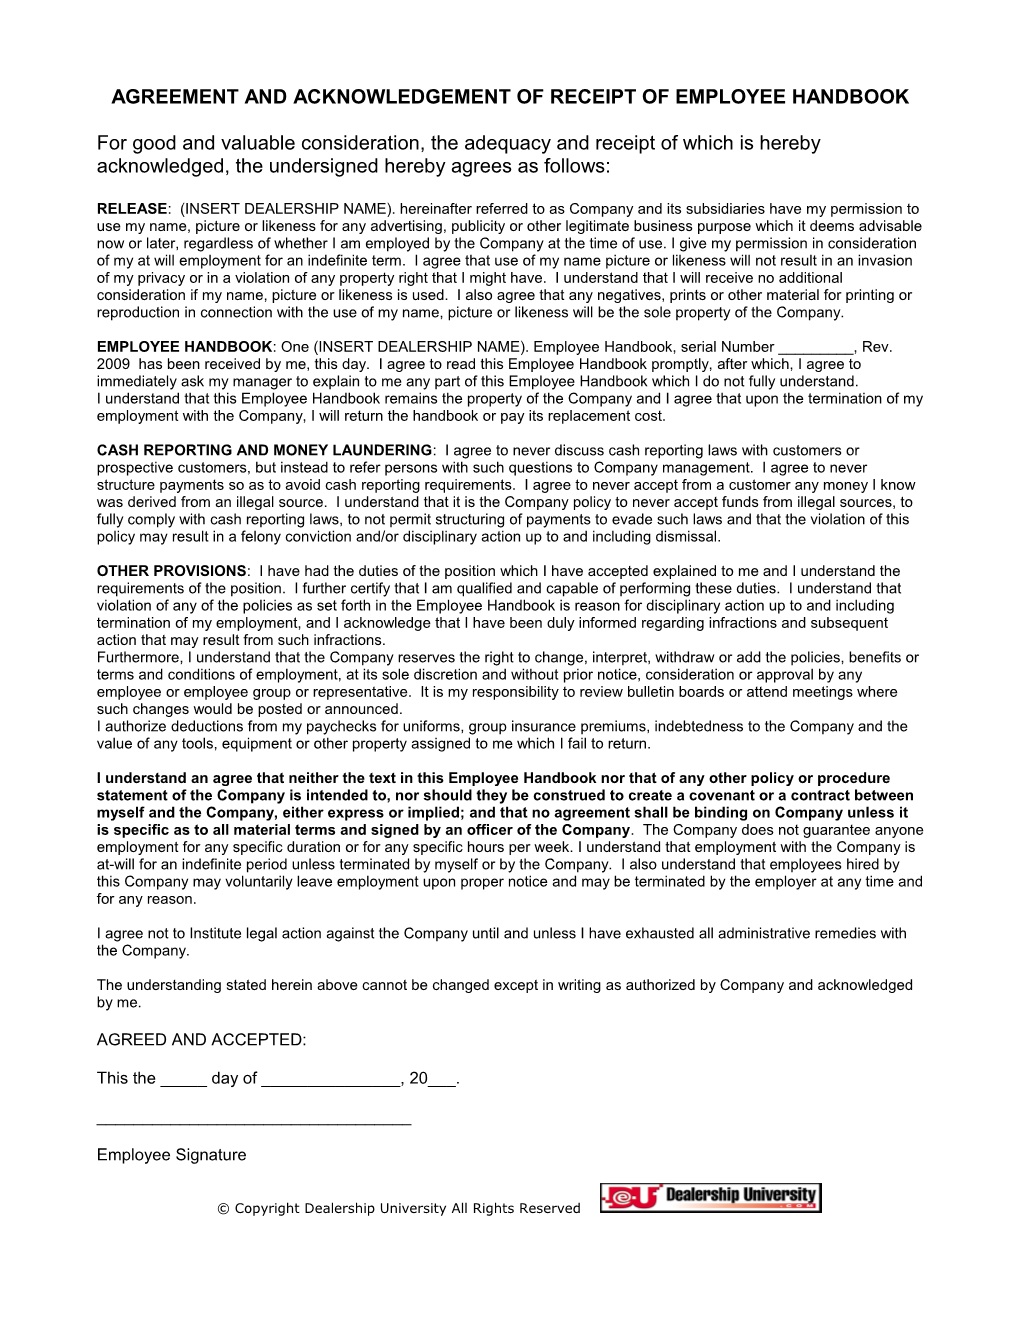 Agreement and Acknowledgement of Receipt of Employee Handbook